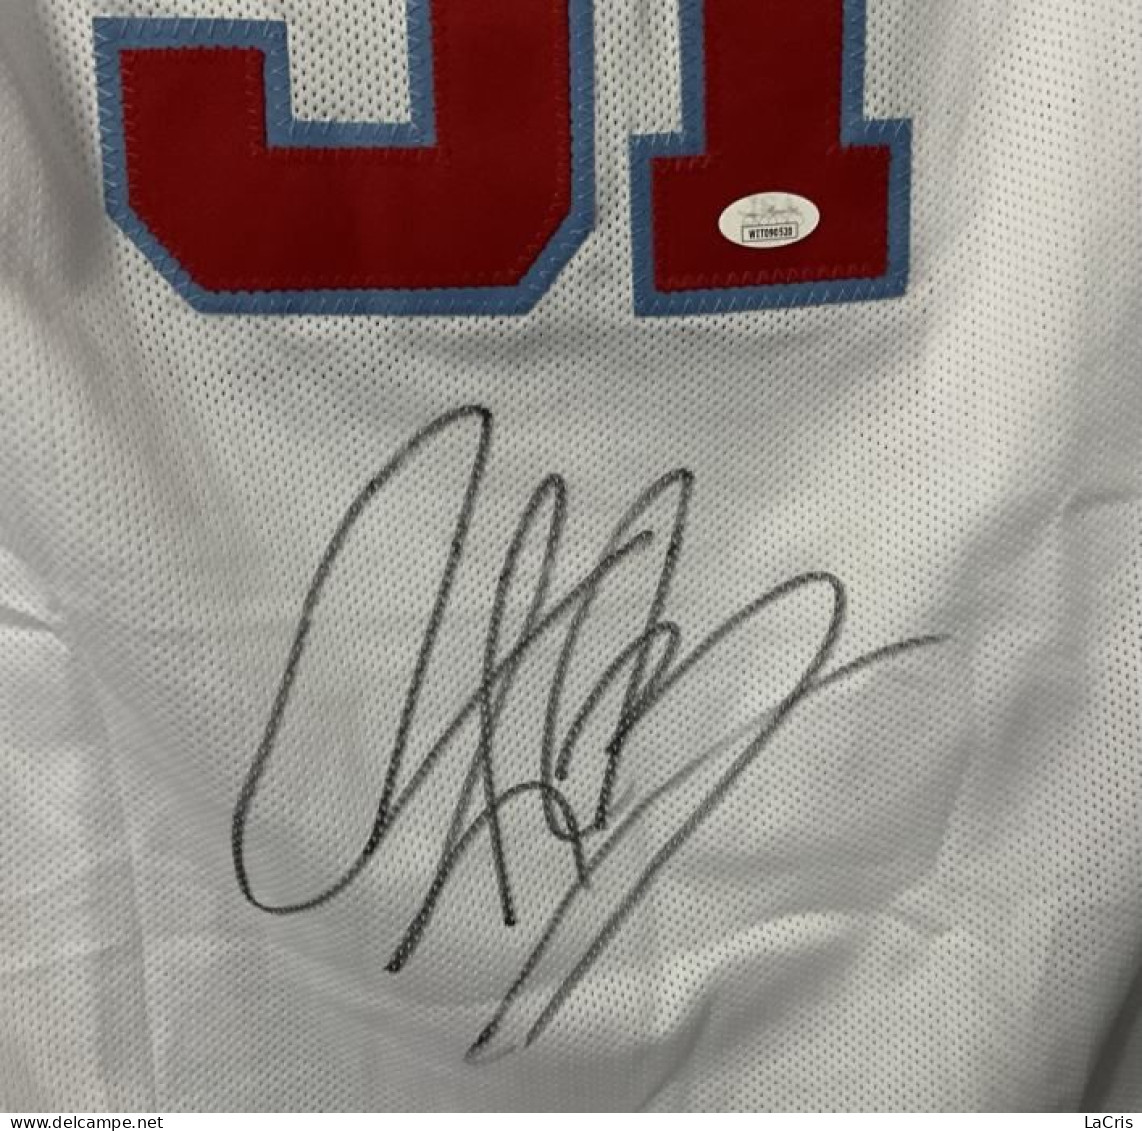 Los Angeles Lakers Dennis Rodman Hand Signed #91 NBA Basketball Custom Jersey Authenticated JSA ! - Autografos